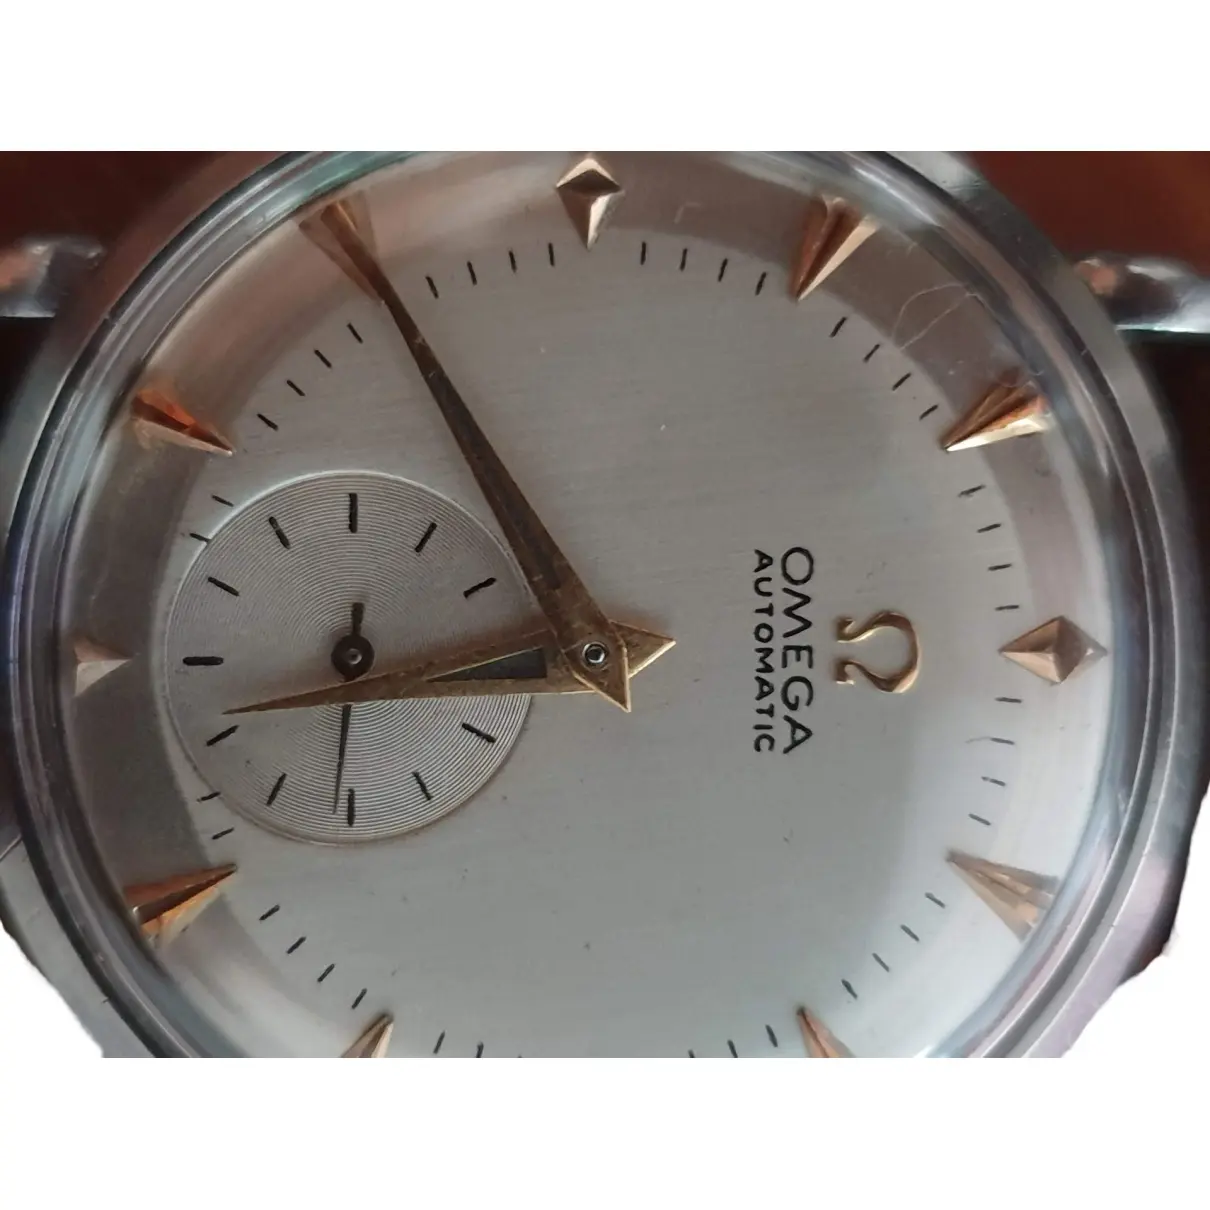 Buy Omega Seamaster watch online - Vintage